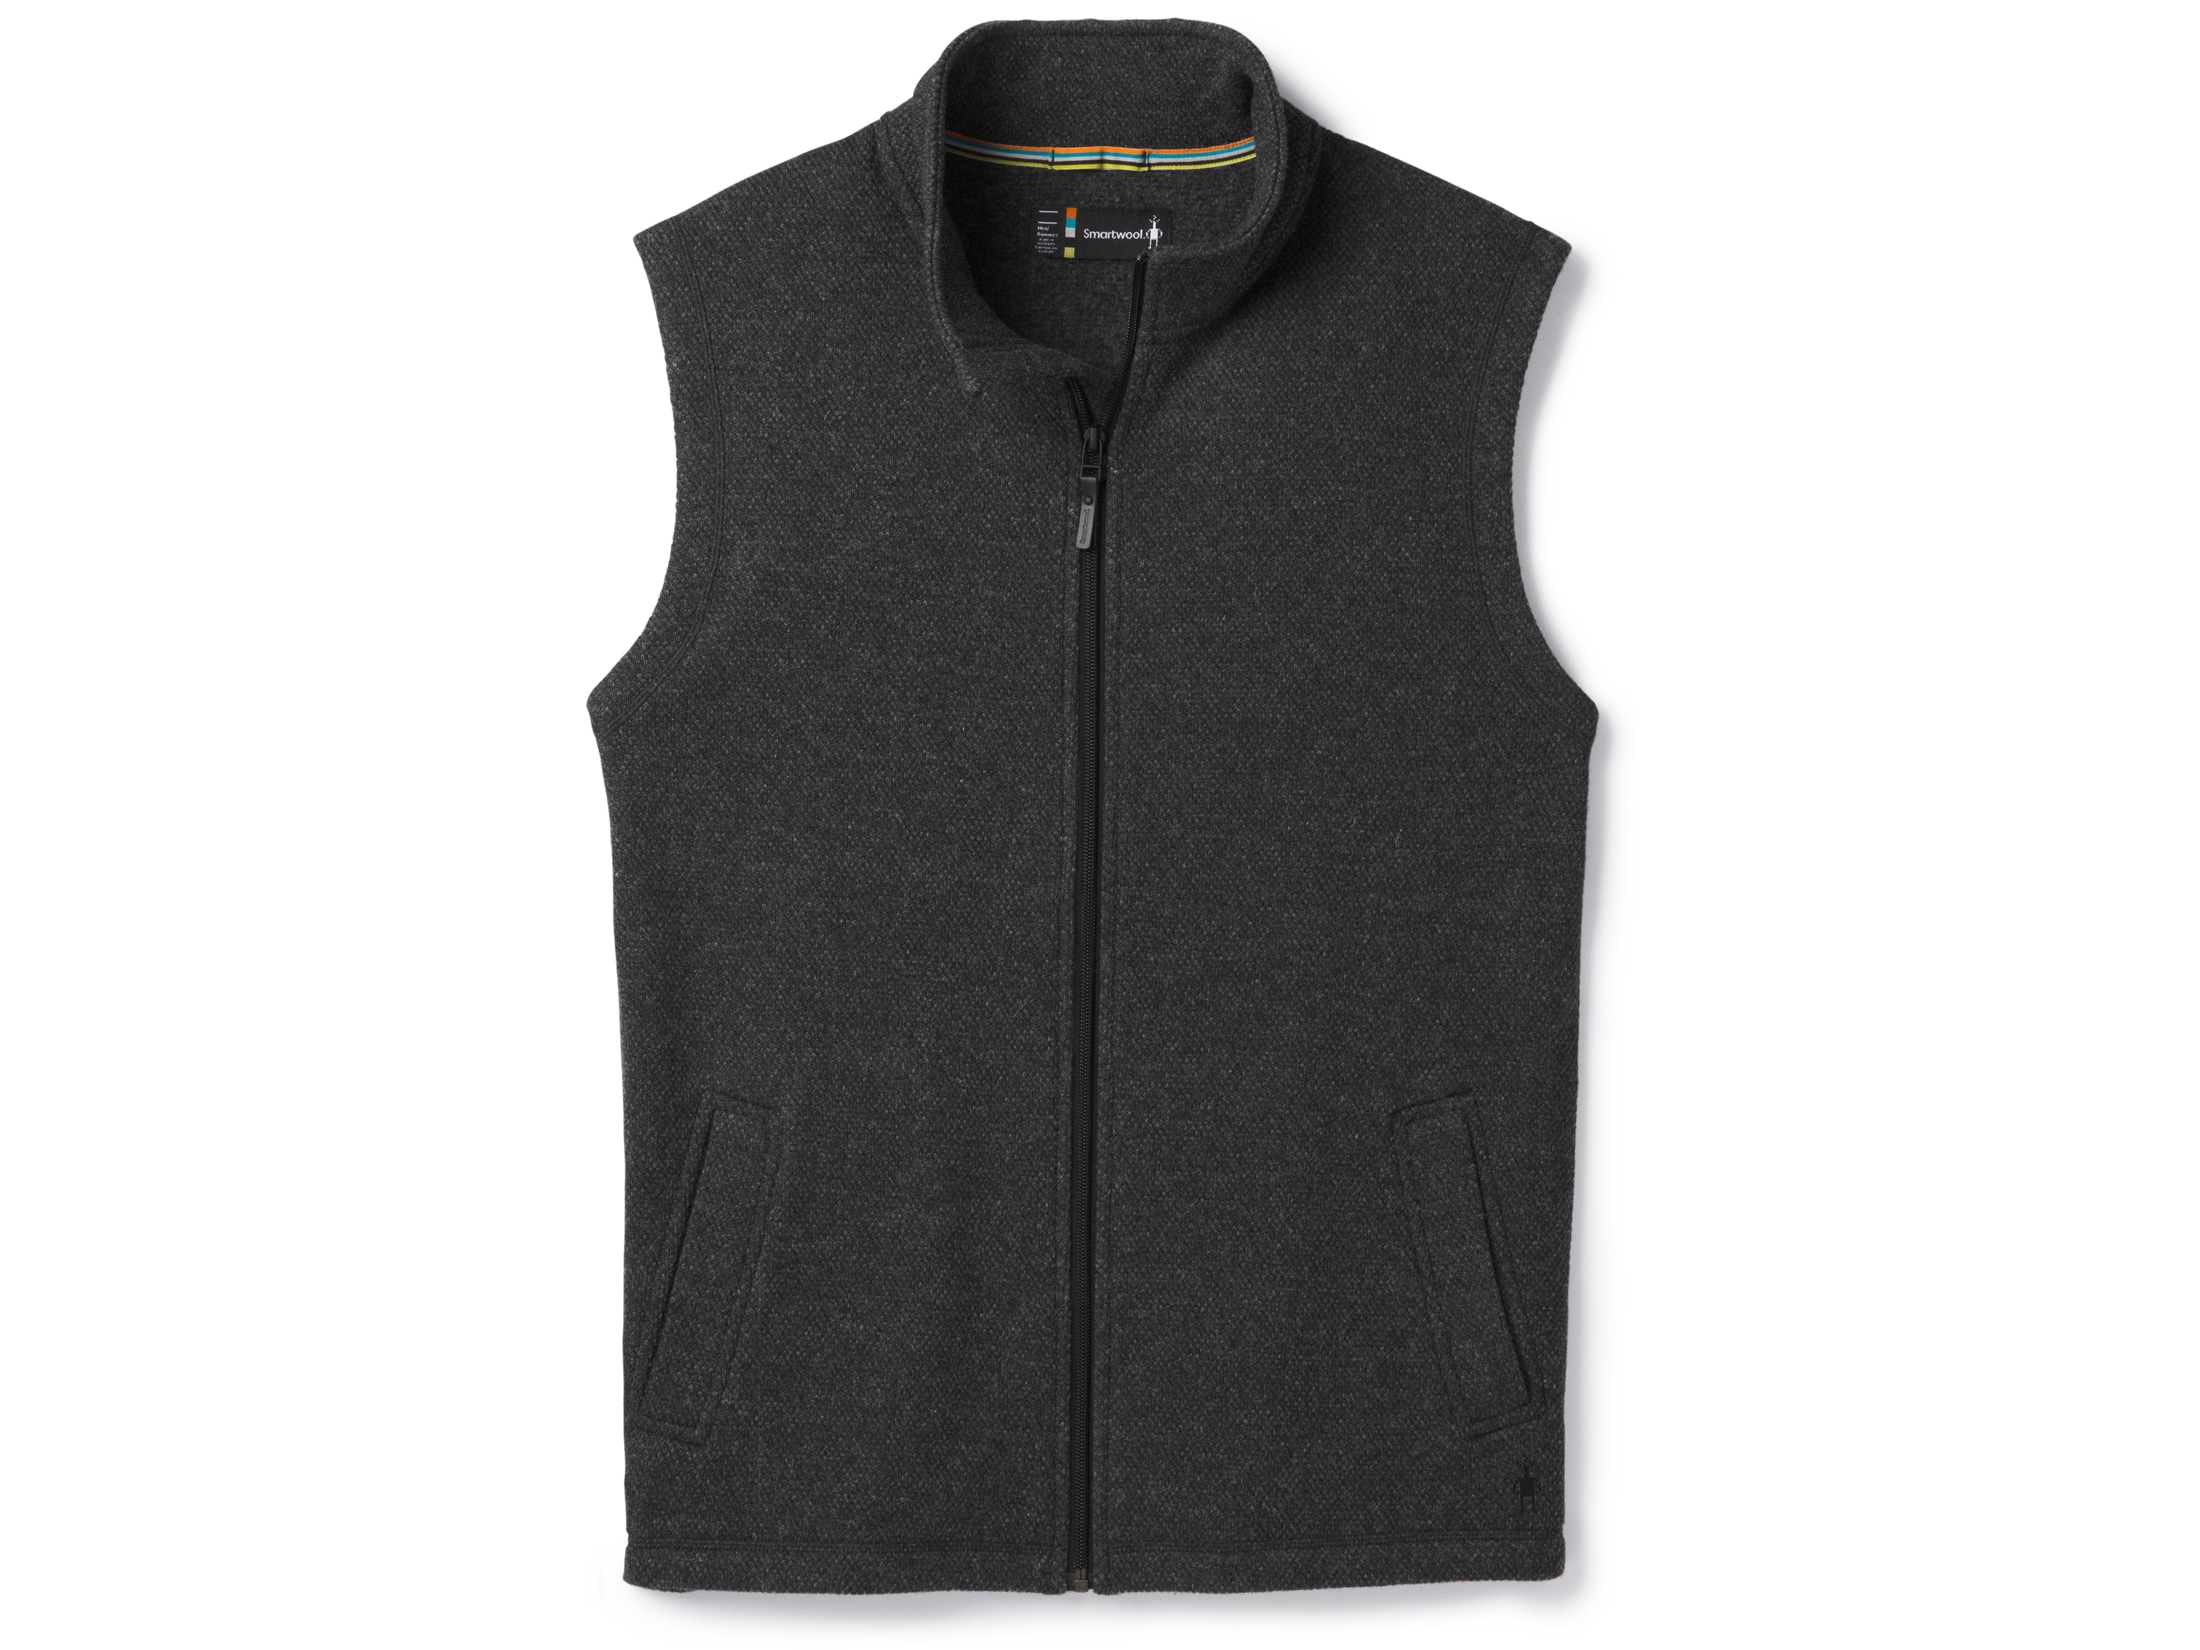 Smartwool Men's Hudson Trail Fleece Vest Polyester/Wool Dark Charcoal